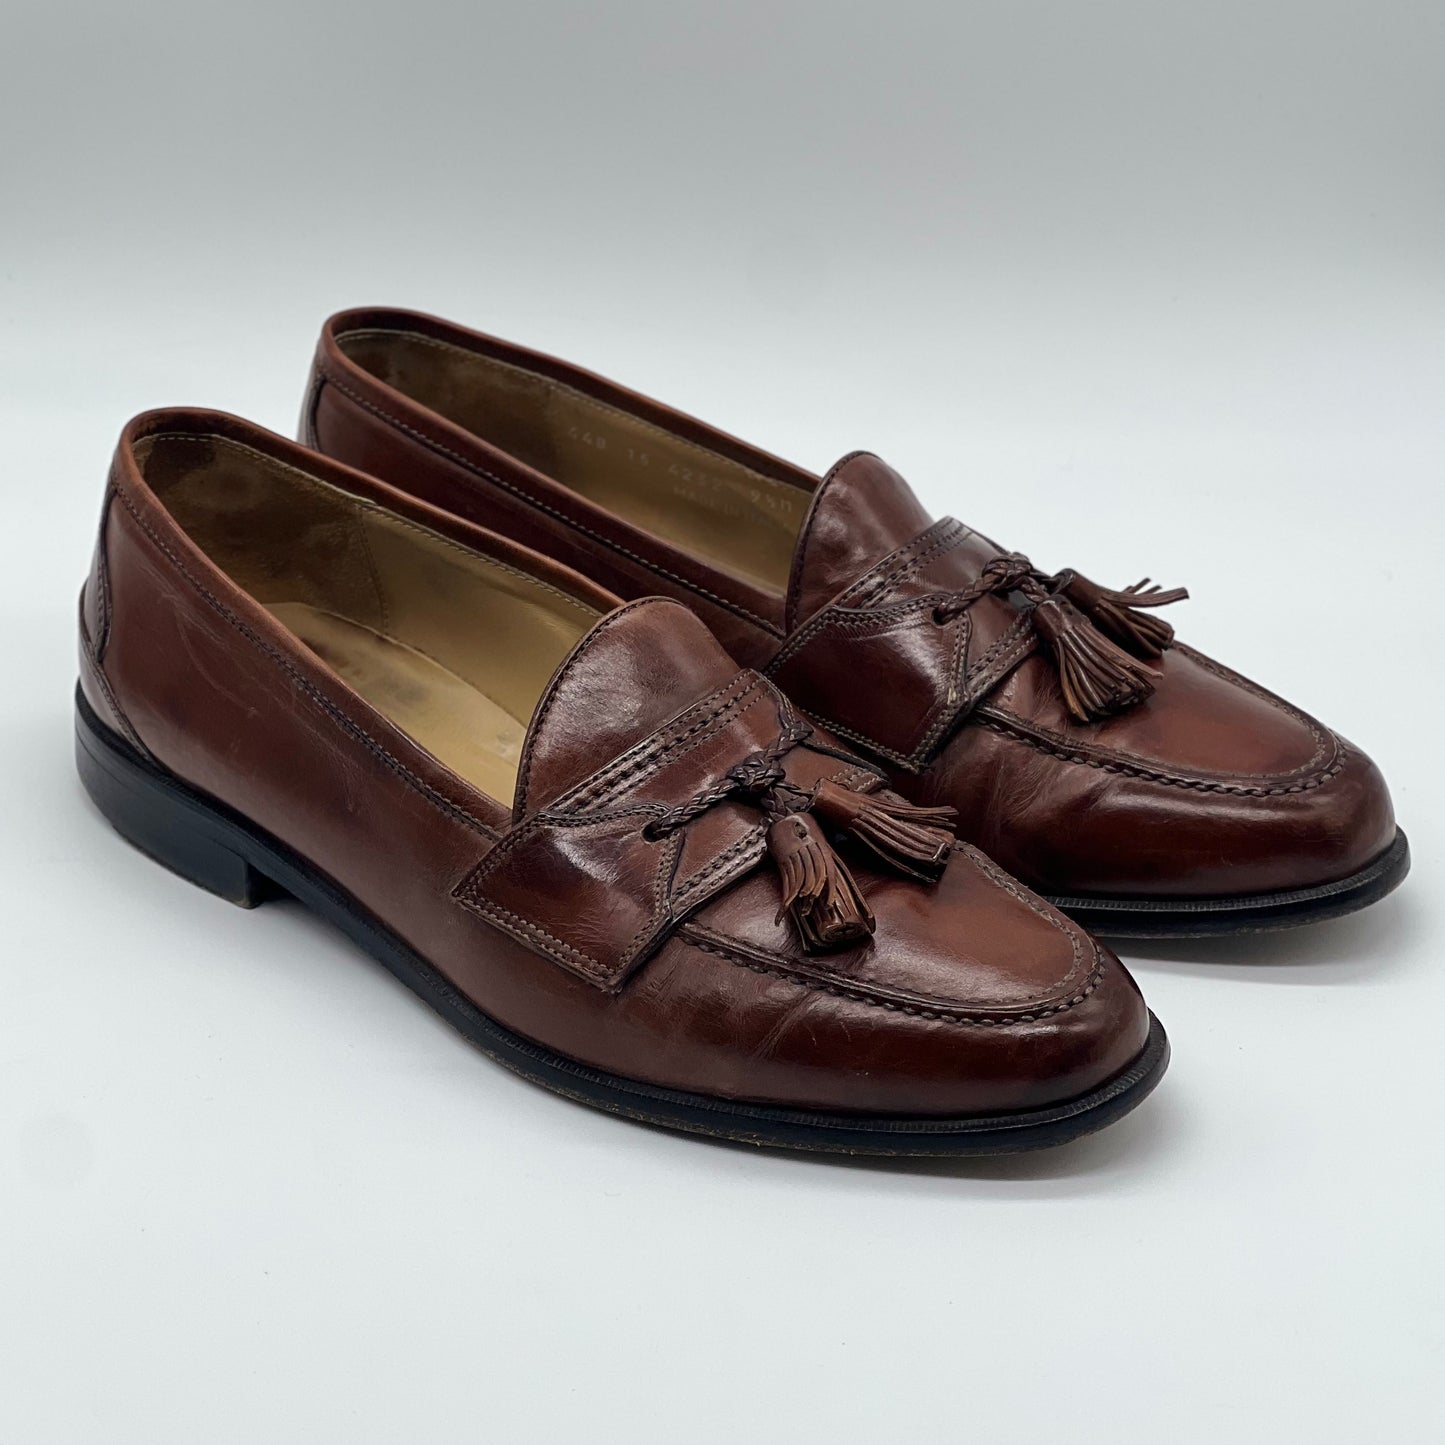 Johnston Murphy Brown Leather Fringe Tassle Loafers Men's 9.5 M Slip on Dress Shoes